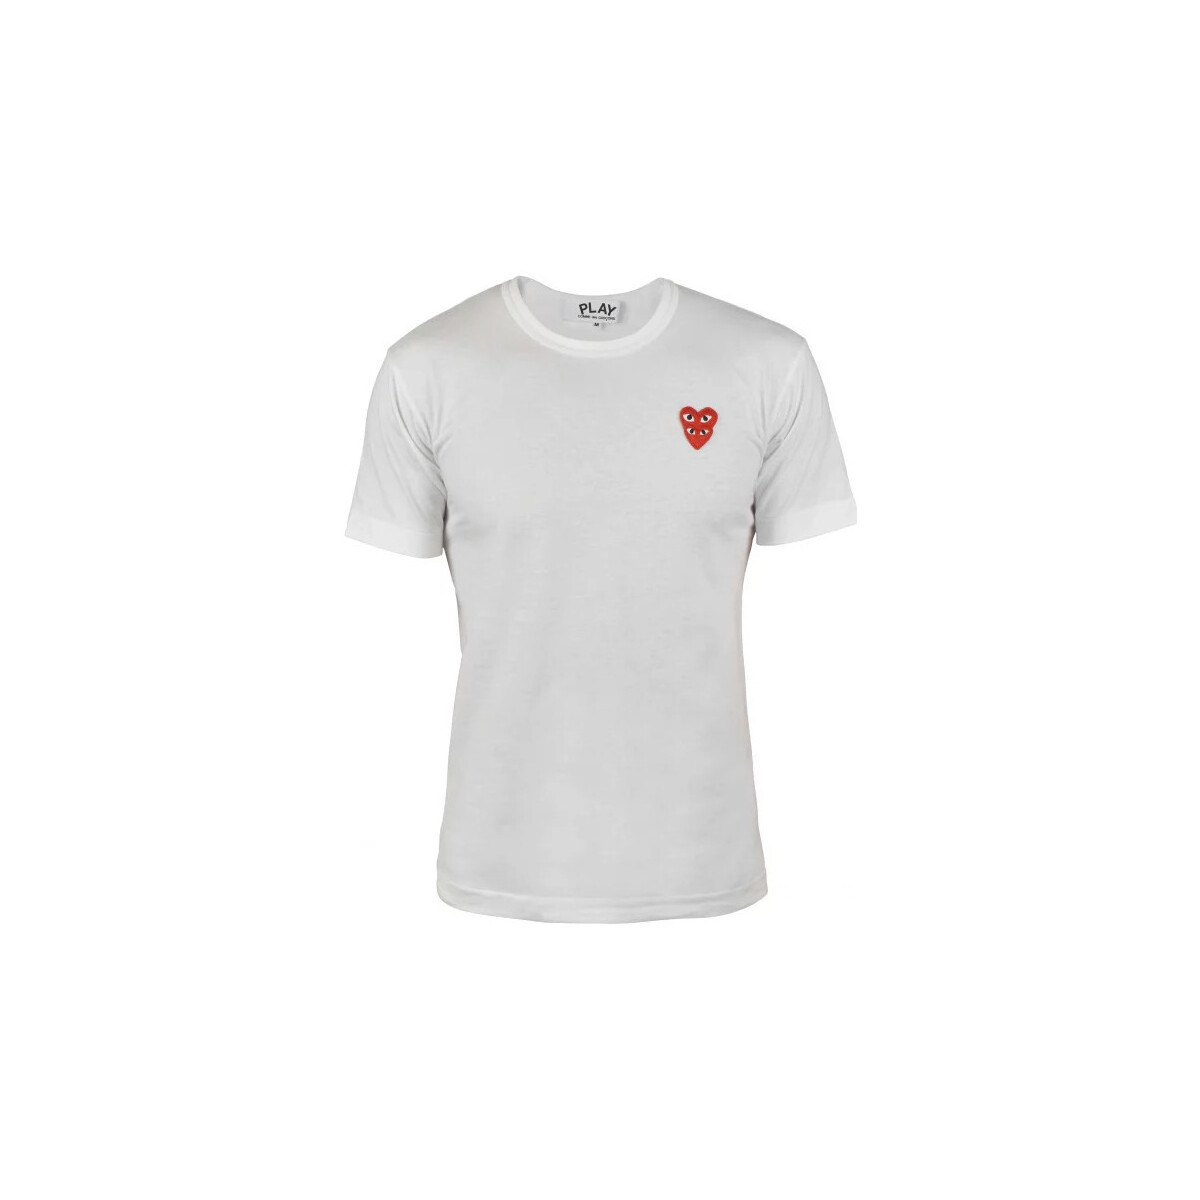 Vêtements Homme Aran Cable 4bar Pullover Barbour International Czarny T-shirt chiaro z blokami kolorów i lamówką T-Shirt chiaro Blanc